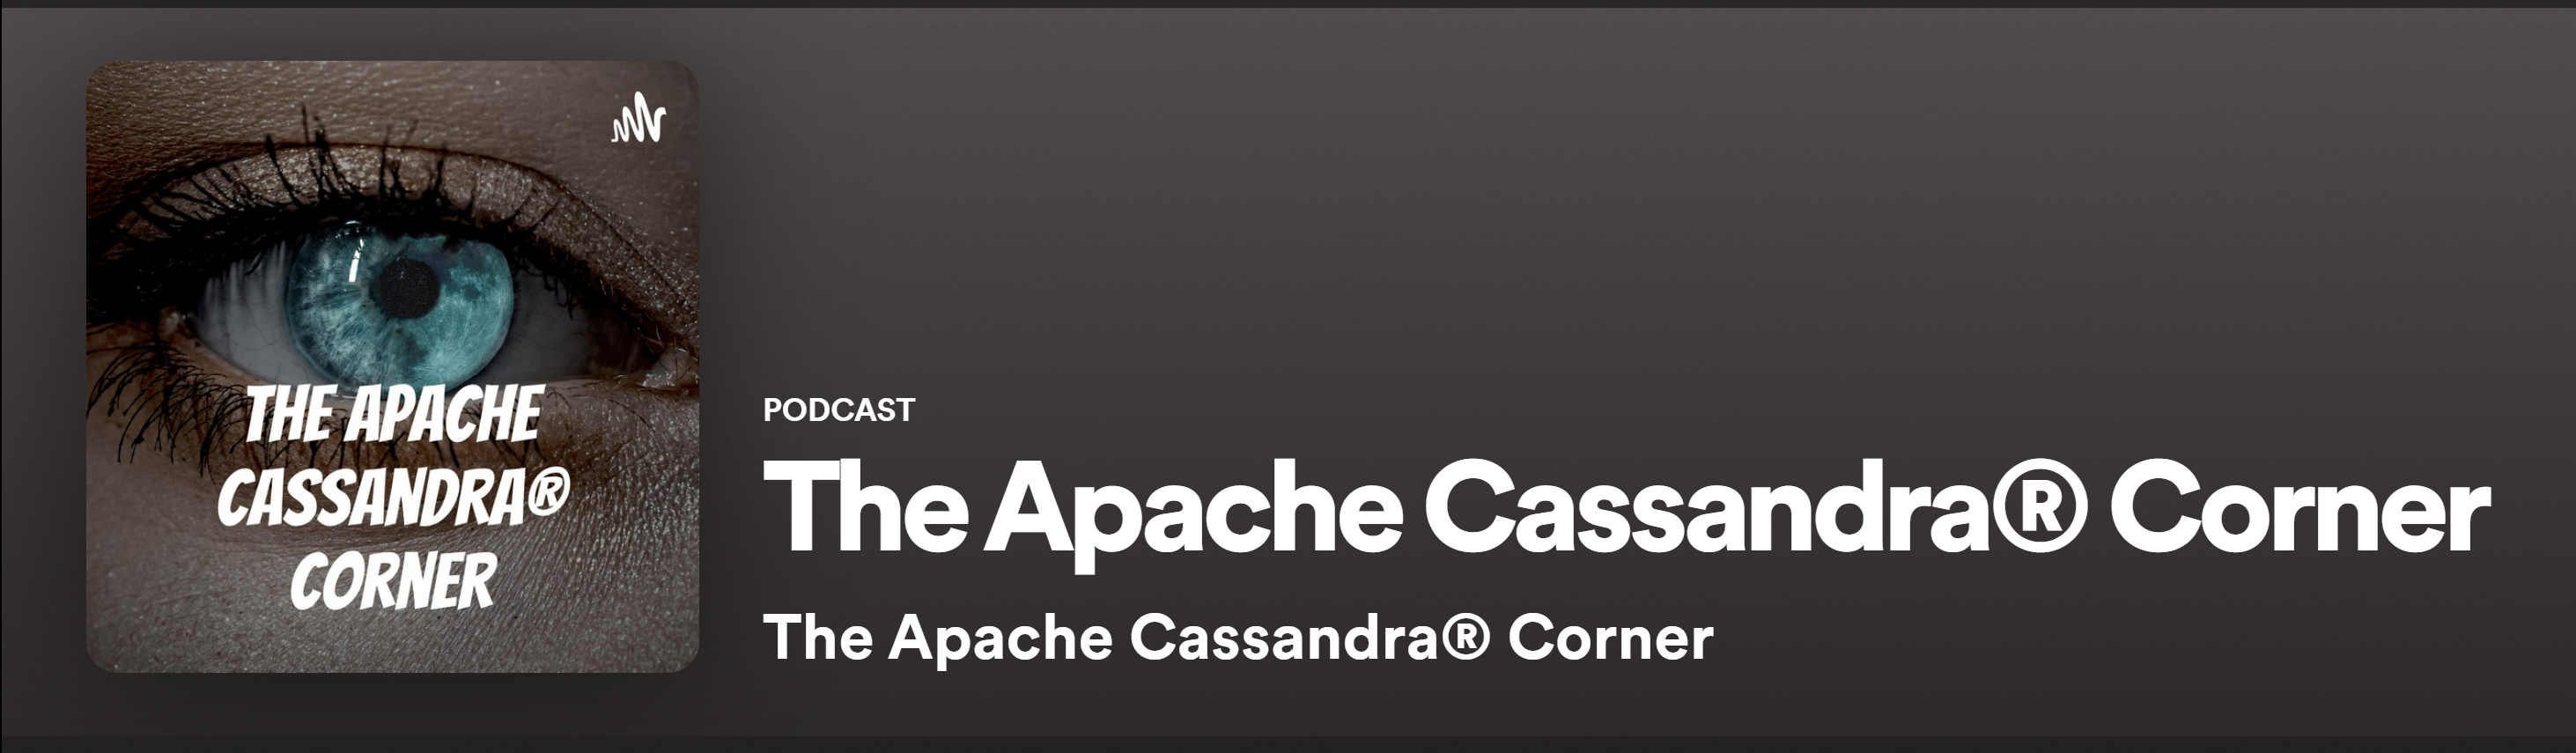 The Apache Cassandra Corner podcast